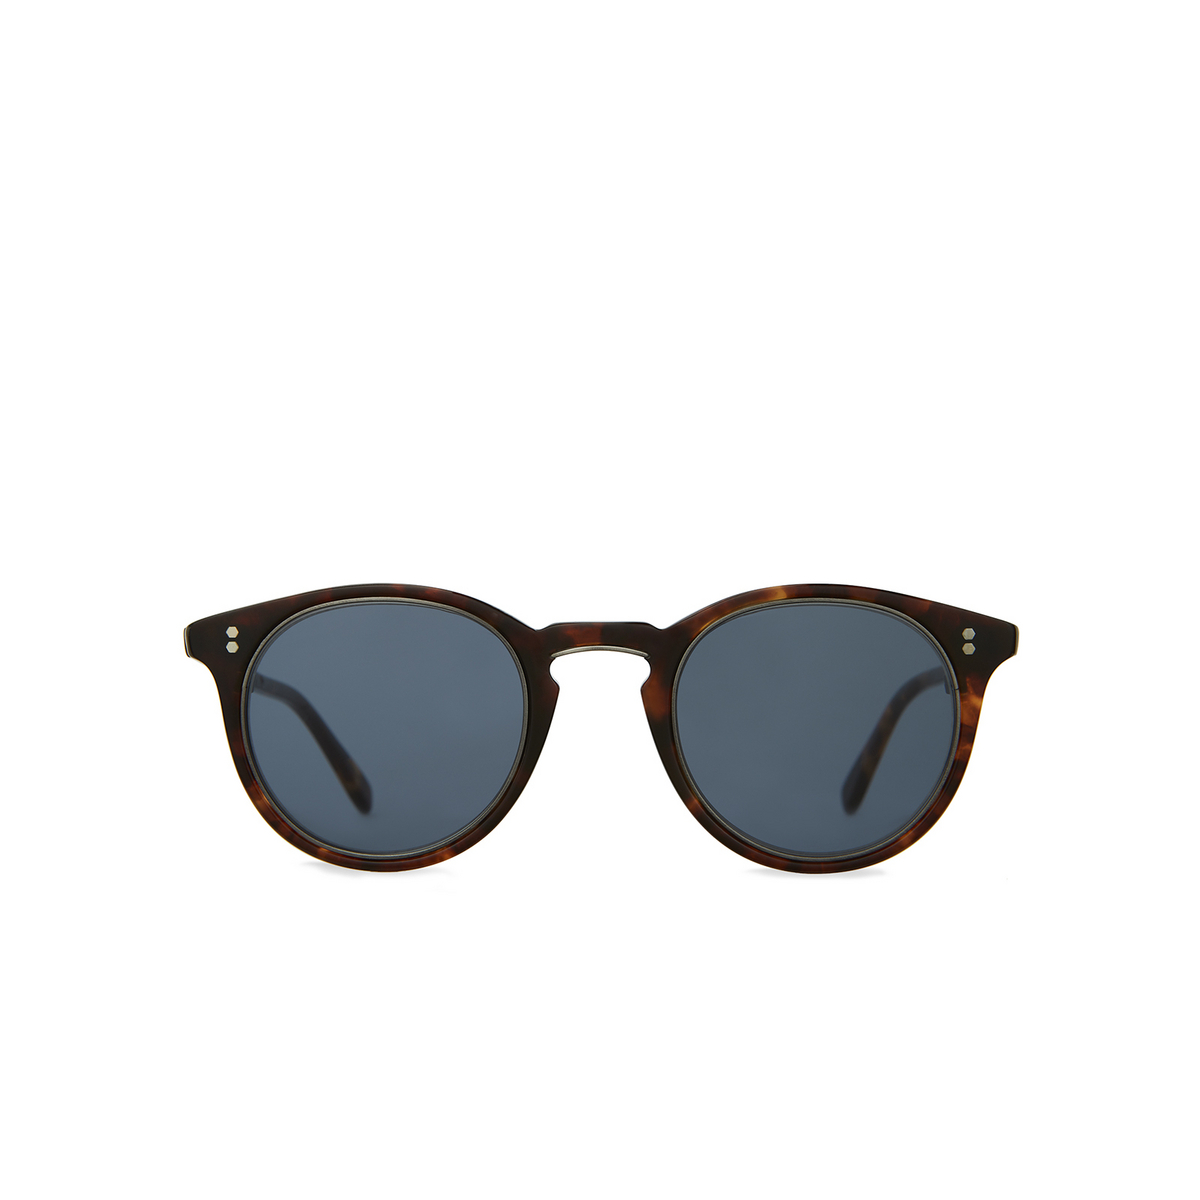 Mr. Leight® Round Sunglasses: Crosby S color Maple - Antique Platinum / Blue Mpl-antplt/blu - front view.